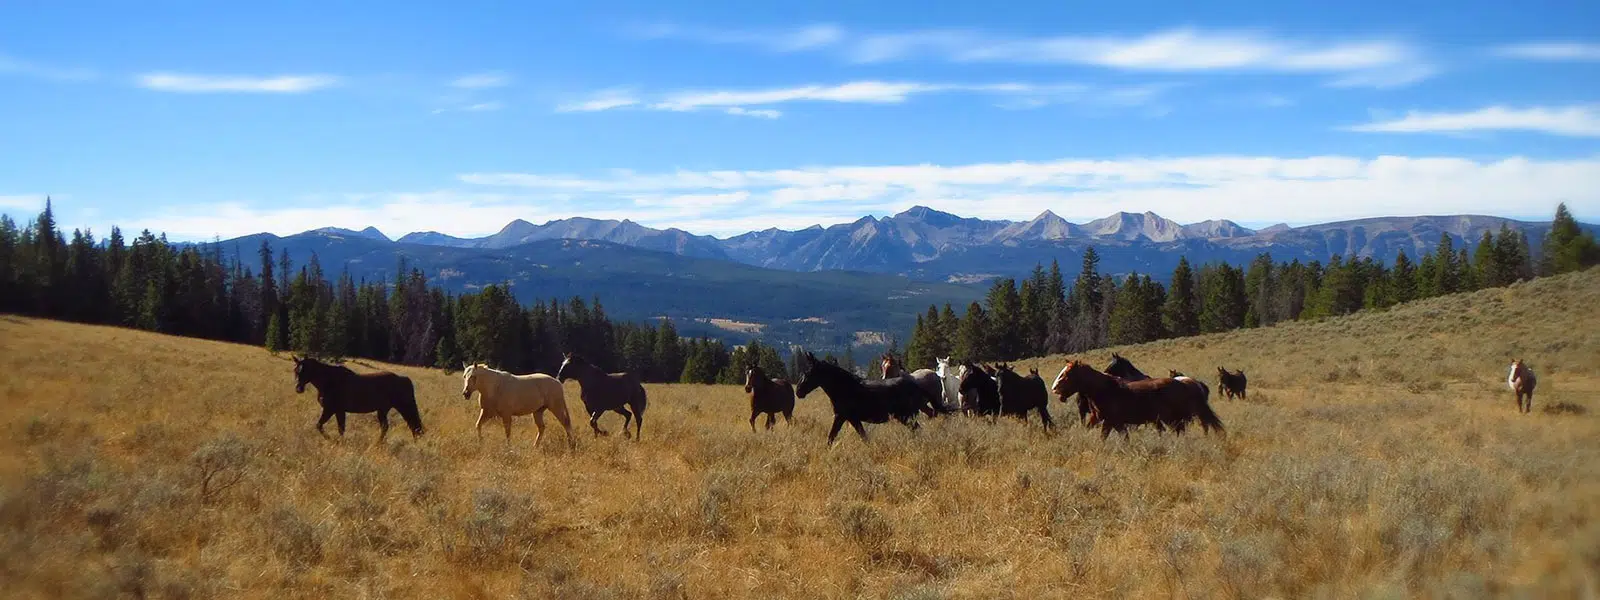 Horses in Montana backcountry